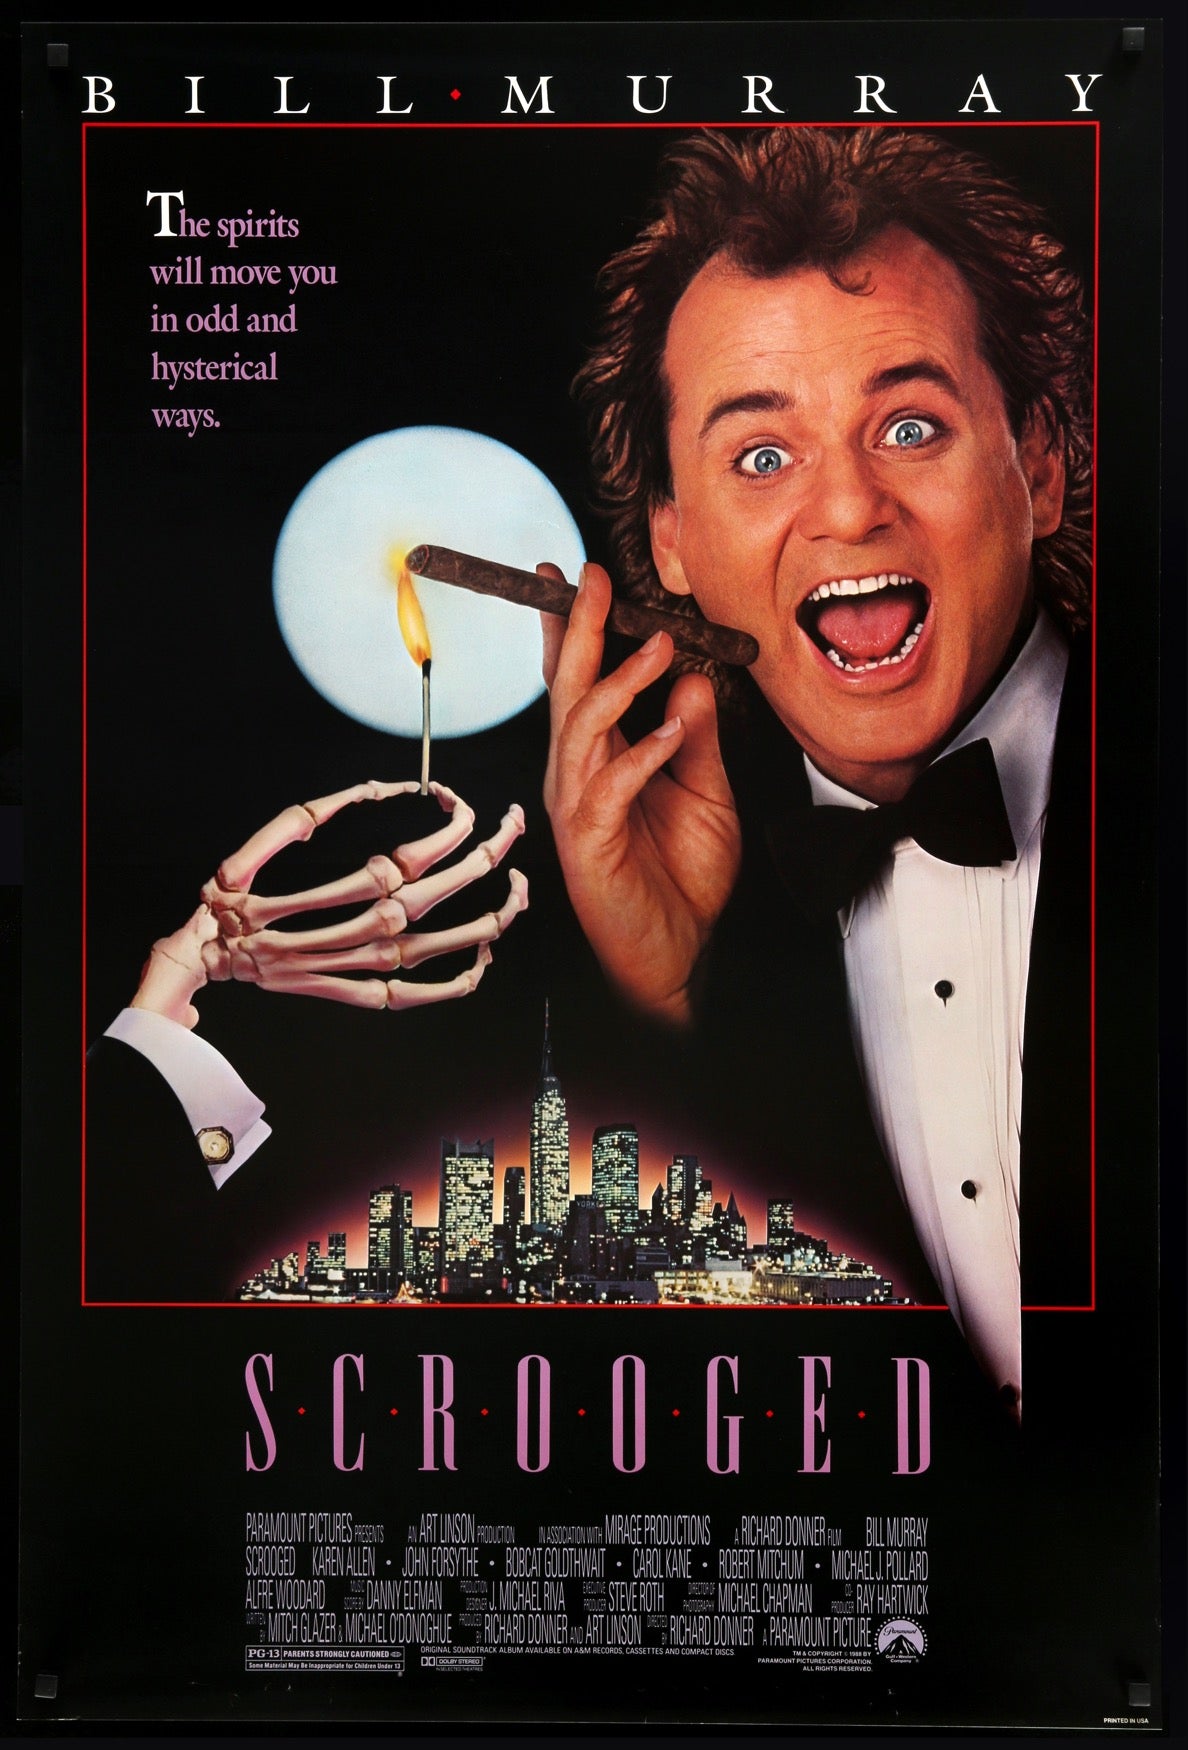 Scrooged (1988) original movie poster for sale at Original Film Art